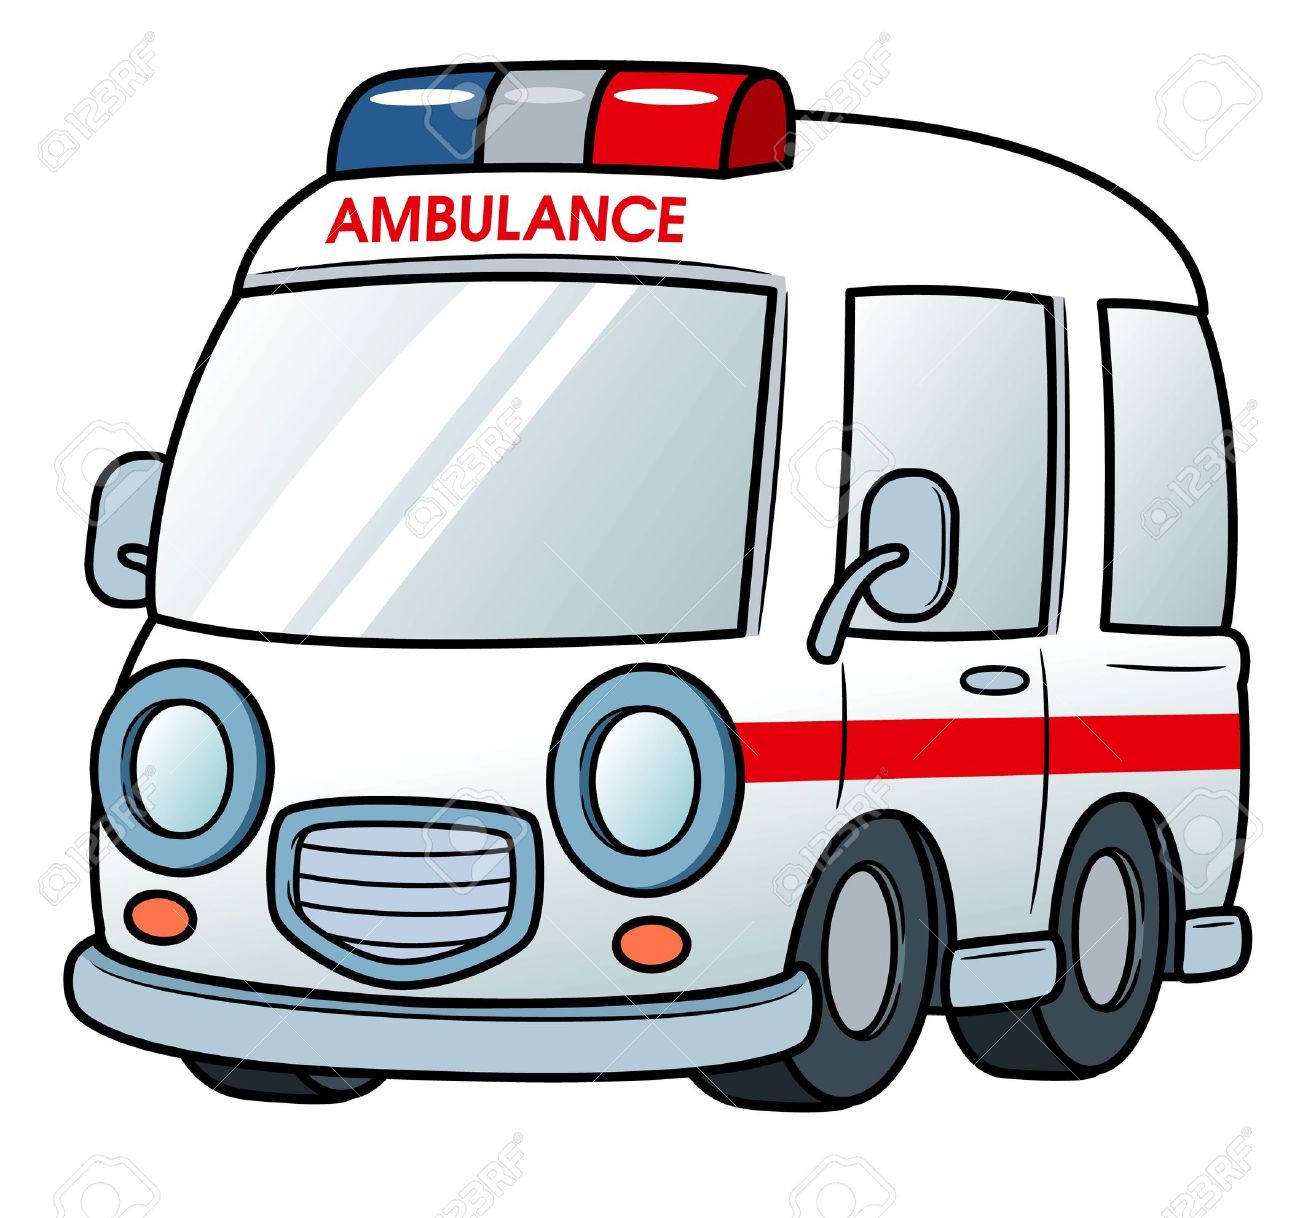 Ambulance Cartoon Clipart.